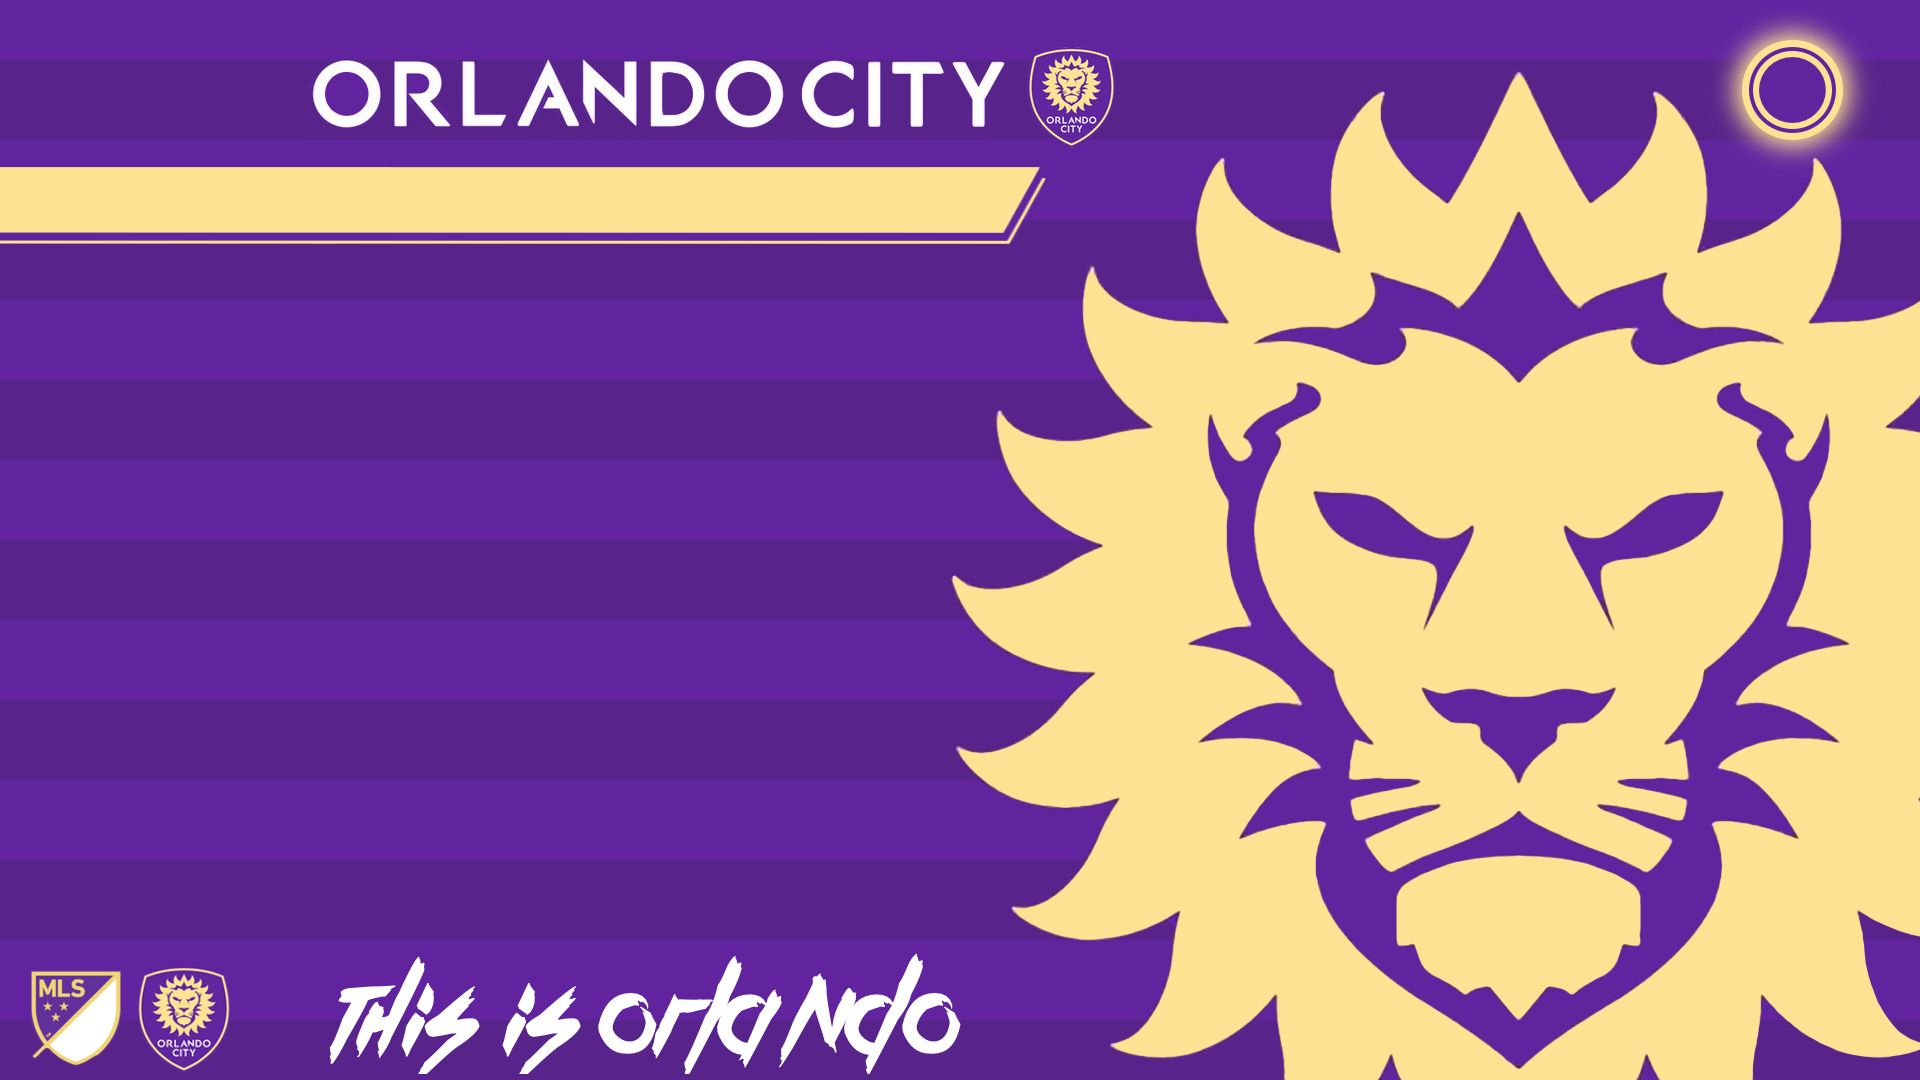 1920x1080 This is Orlando #9ine #FollowLiveShare @OrlandoCIty | Orlando city, Orlando city soccer, Soccer club